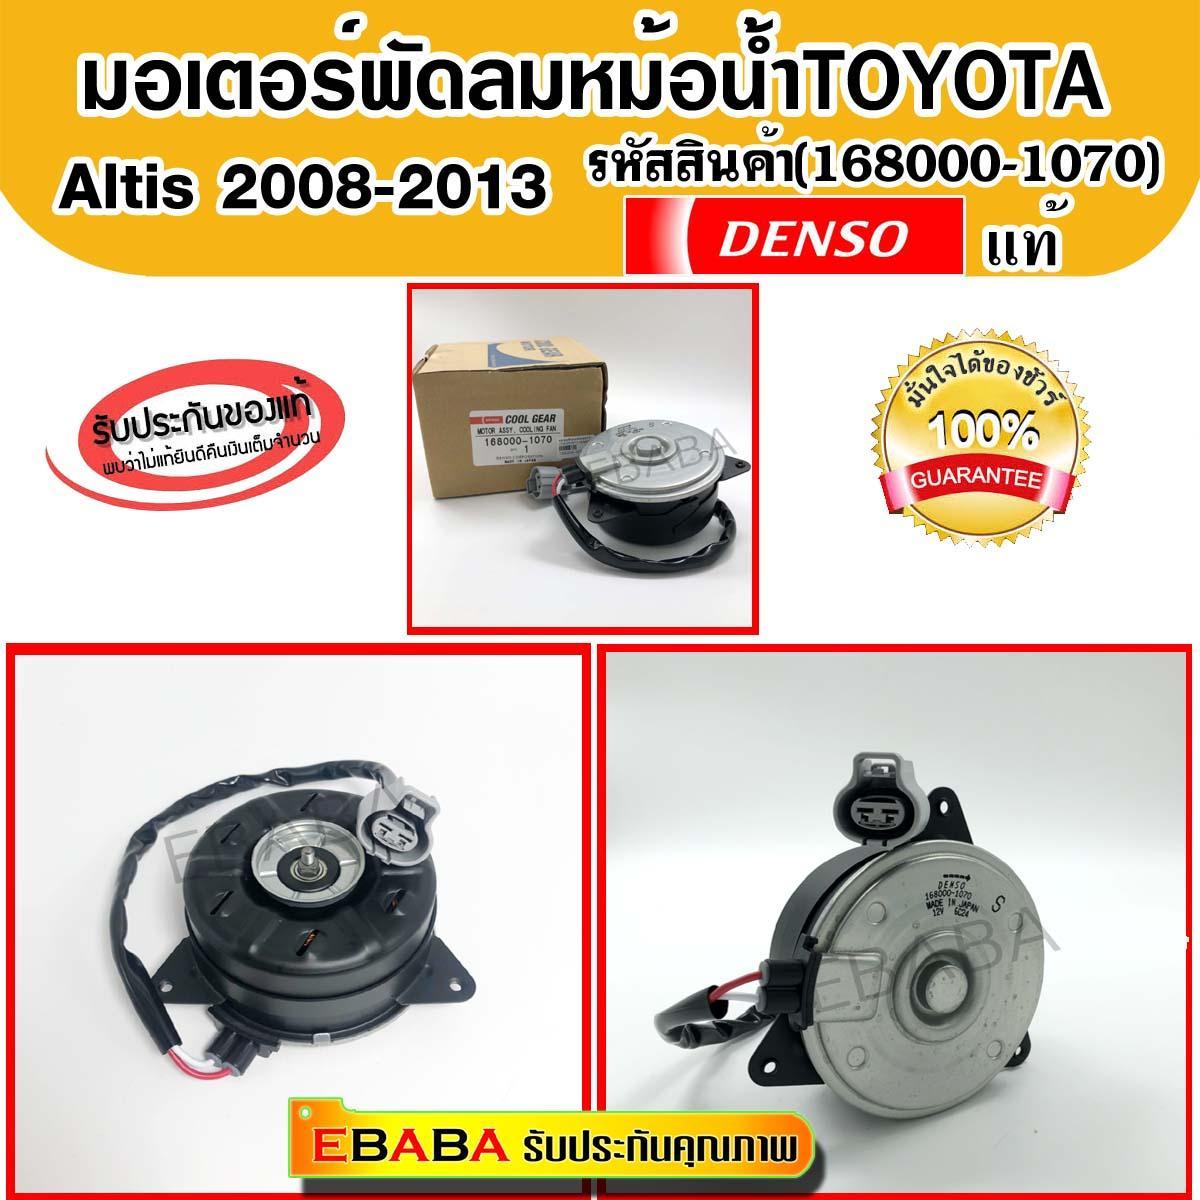 Denso มอเตอร์พัดลม แอร์ หม้อน้ำ Toyota Altis 2008-2013 (รหัสสินค้า 168000-1070)